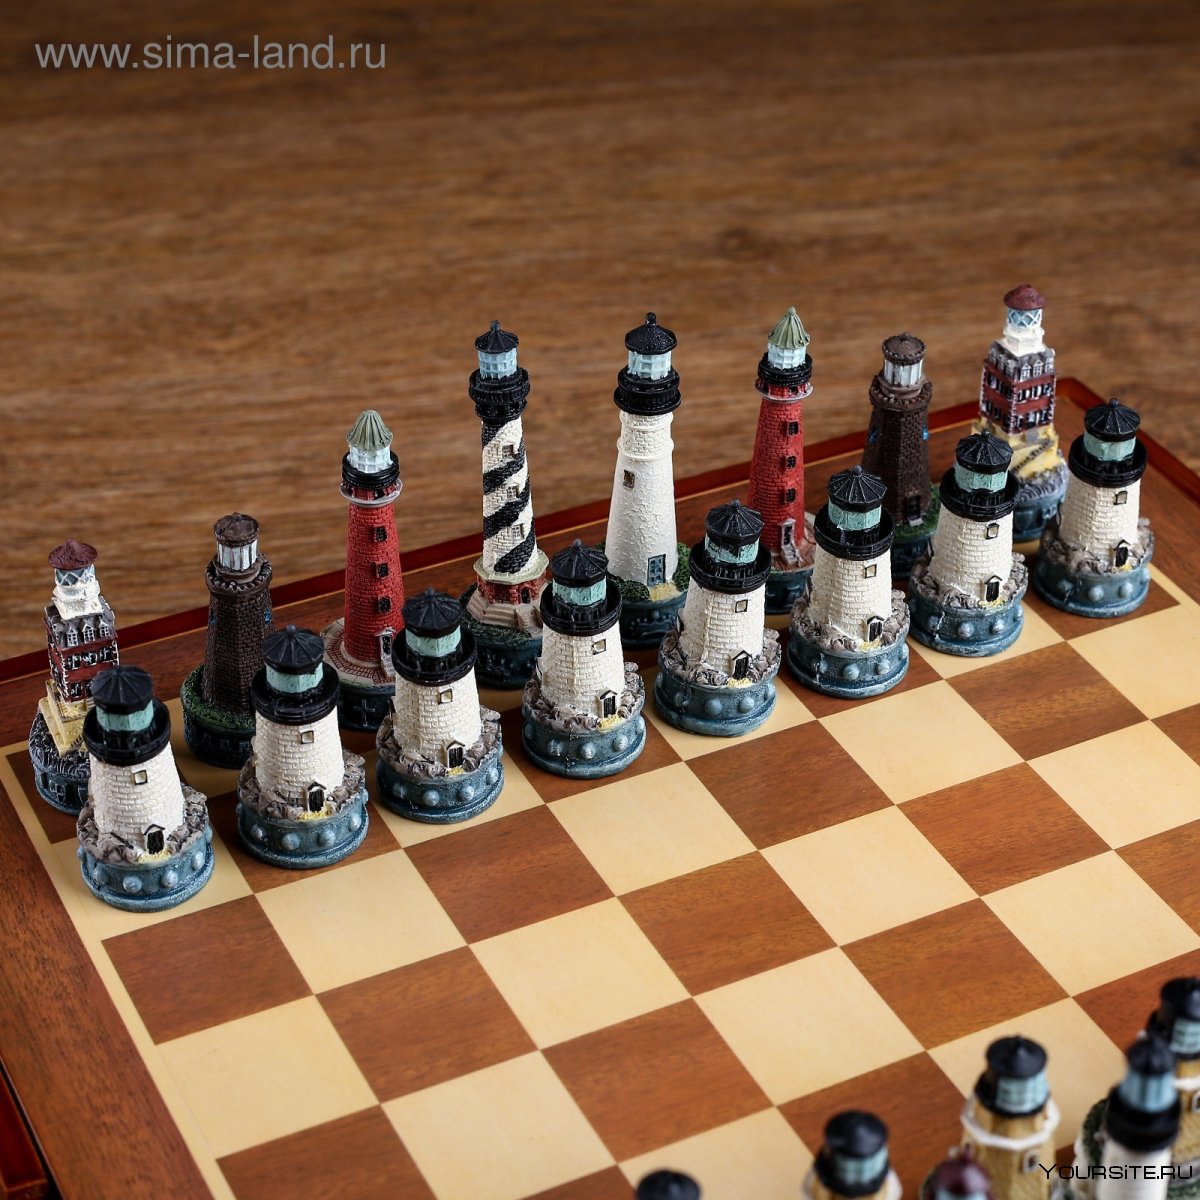 Космические шахматы